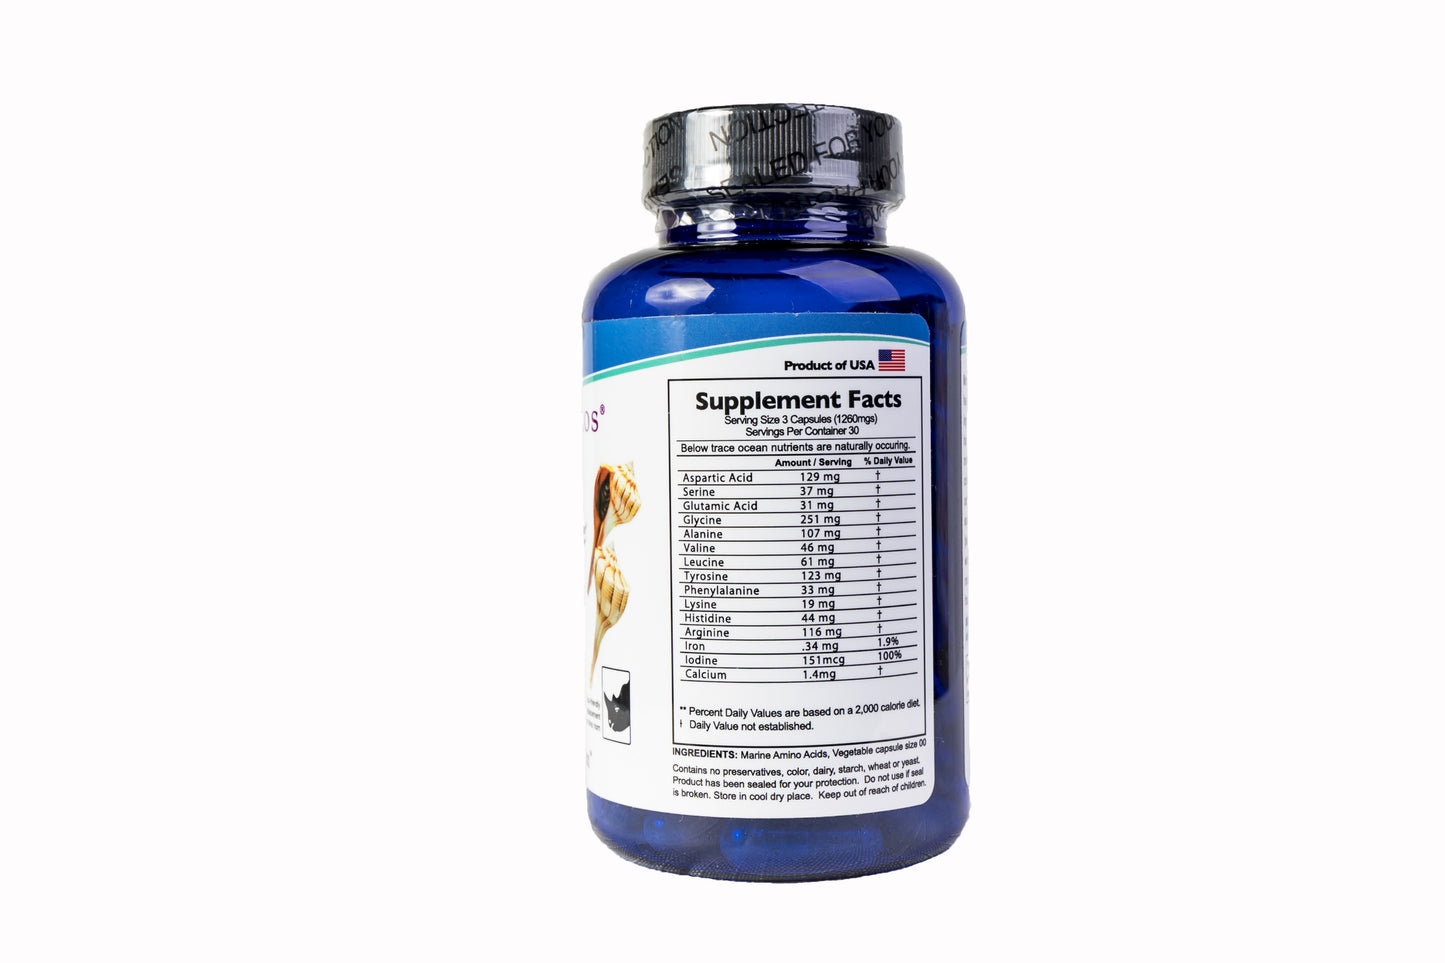 Natural Health Supplement – PotentSea® Marine Aminos